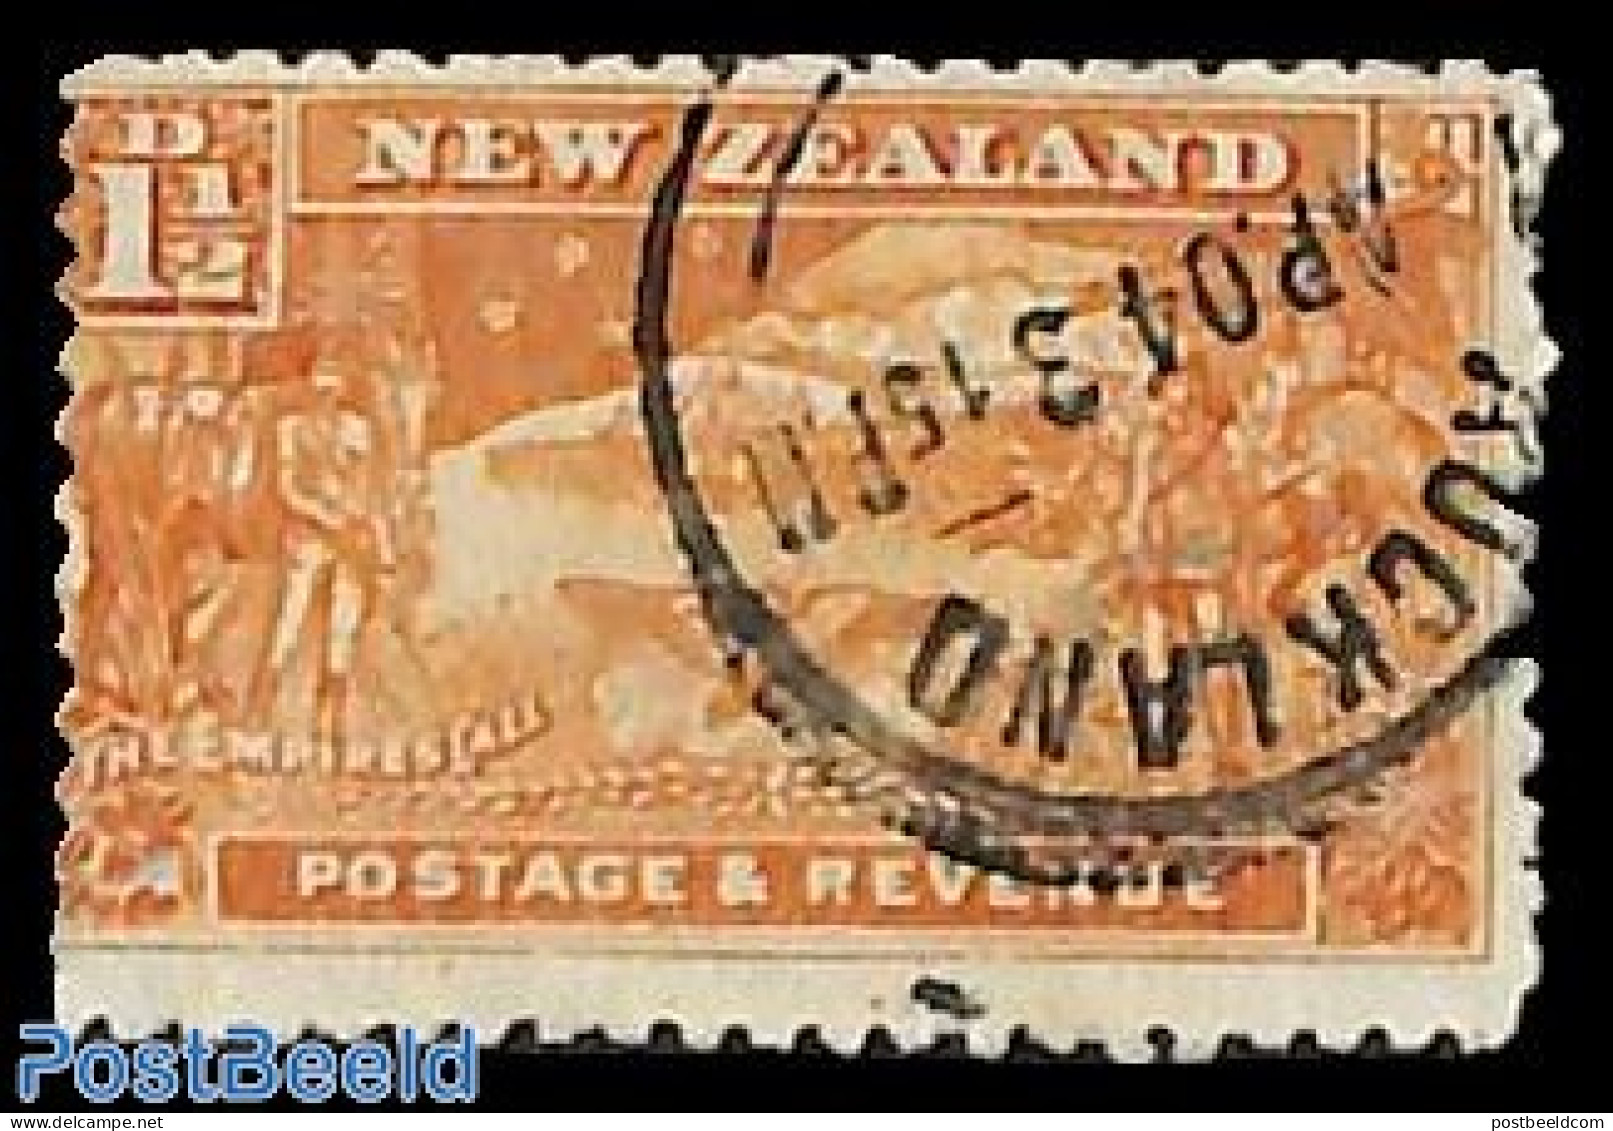 New Zealand 1900 Boer War 1v, Used, Used Or CTO - Usati